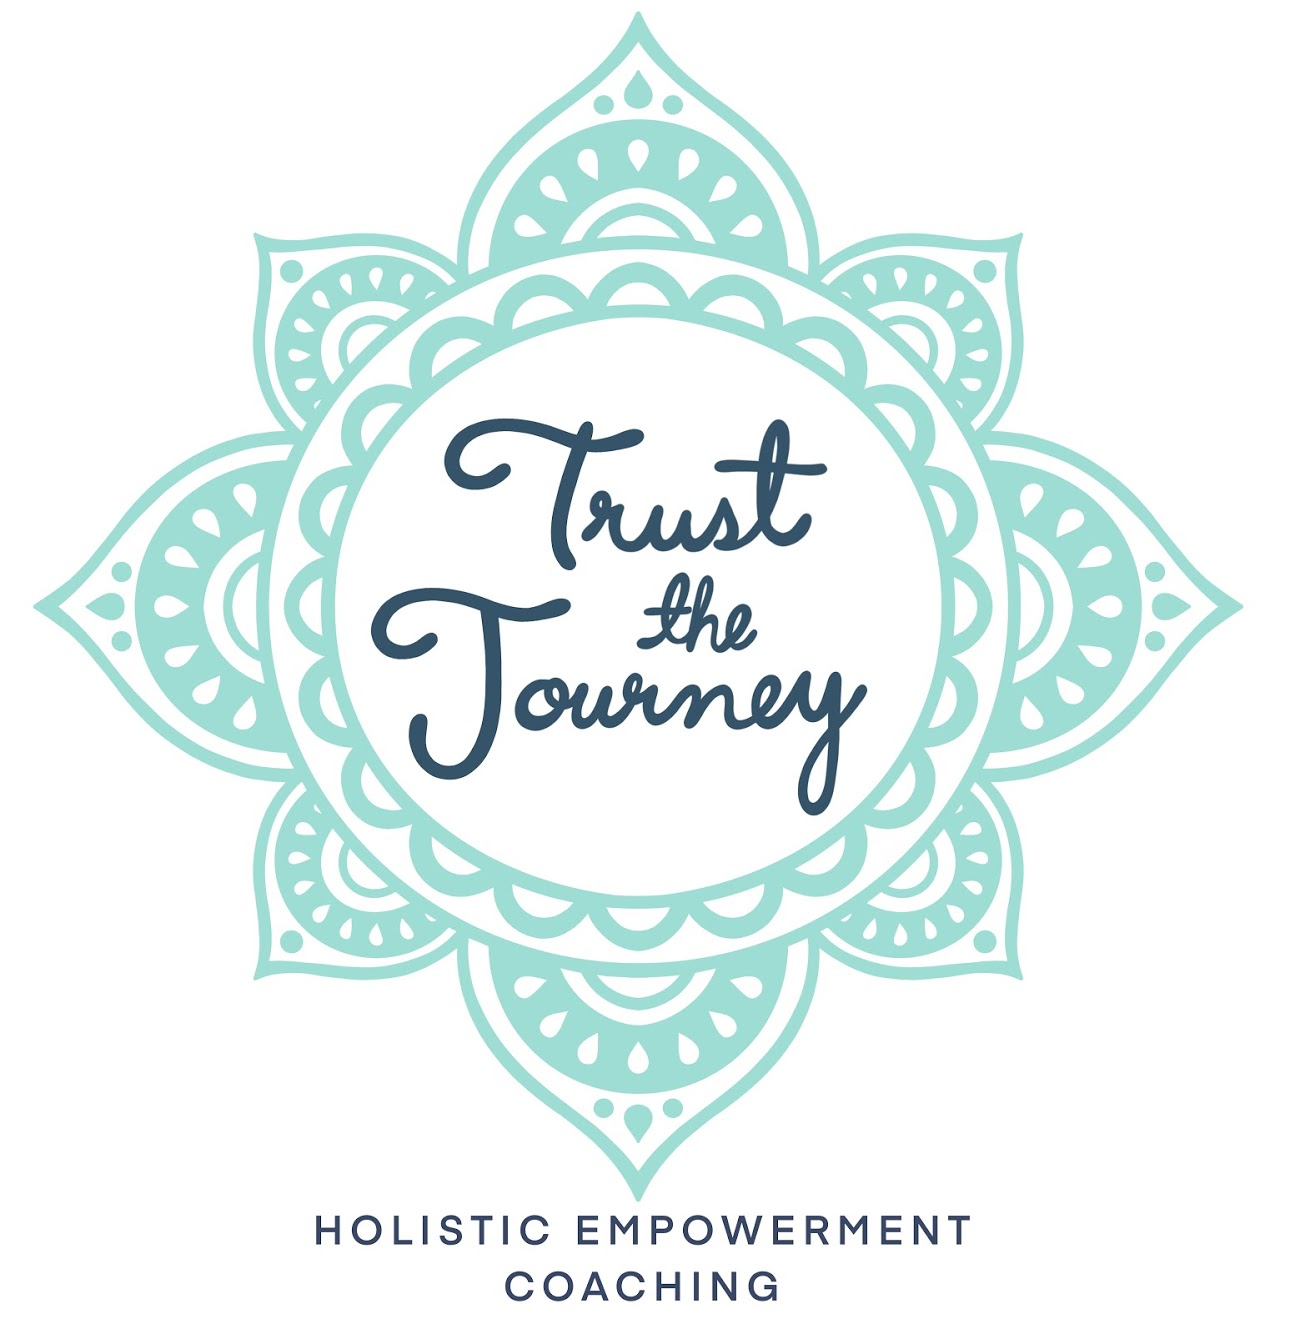 Trust the Journey